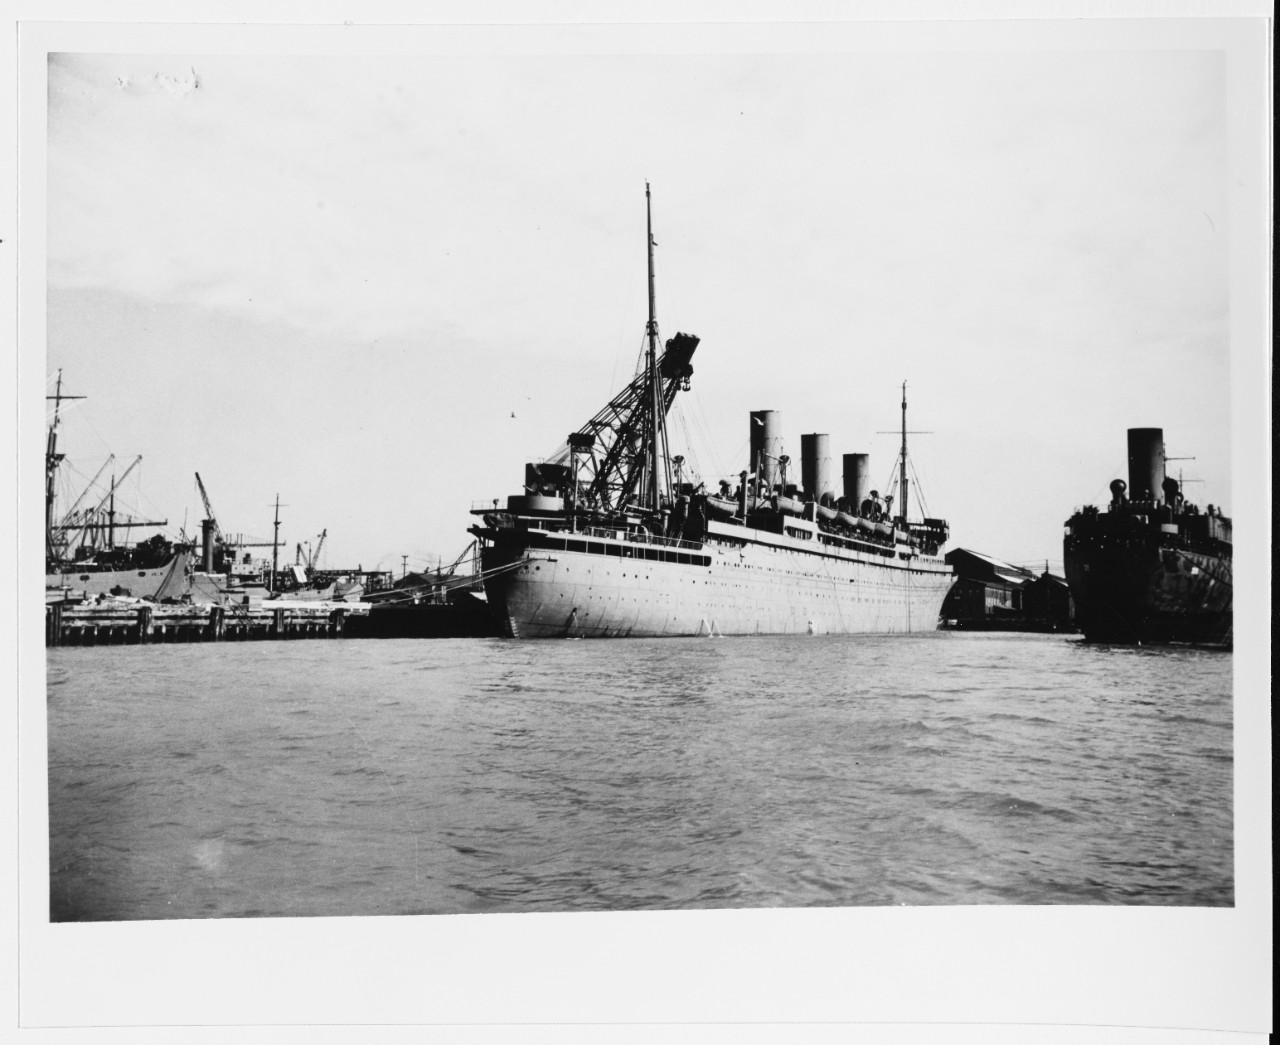 SS EMPRESS OF CANADA (British Transport, 1922-43)